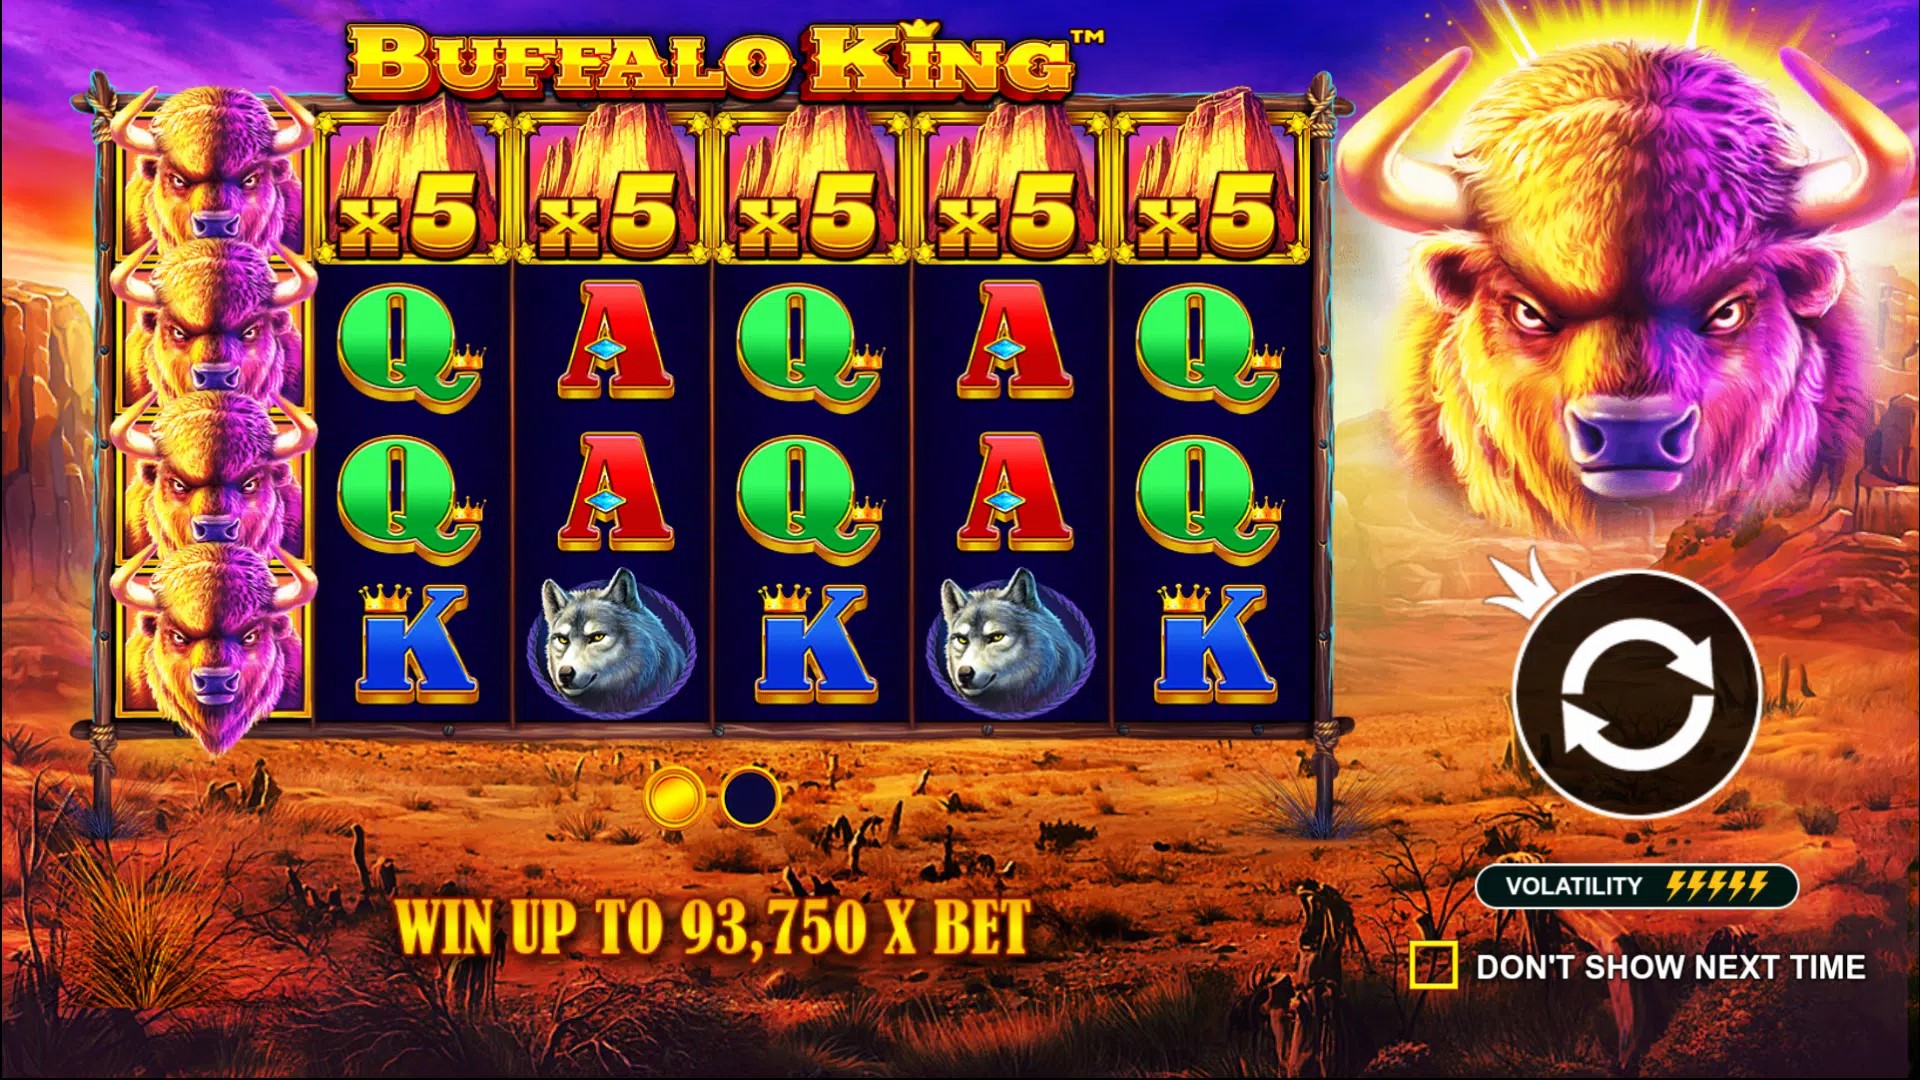 Petualangan dan Kejutan: Pengalaman Main Game Slot Online Buffalo King